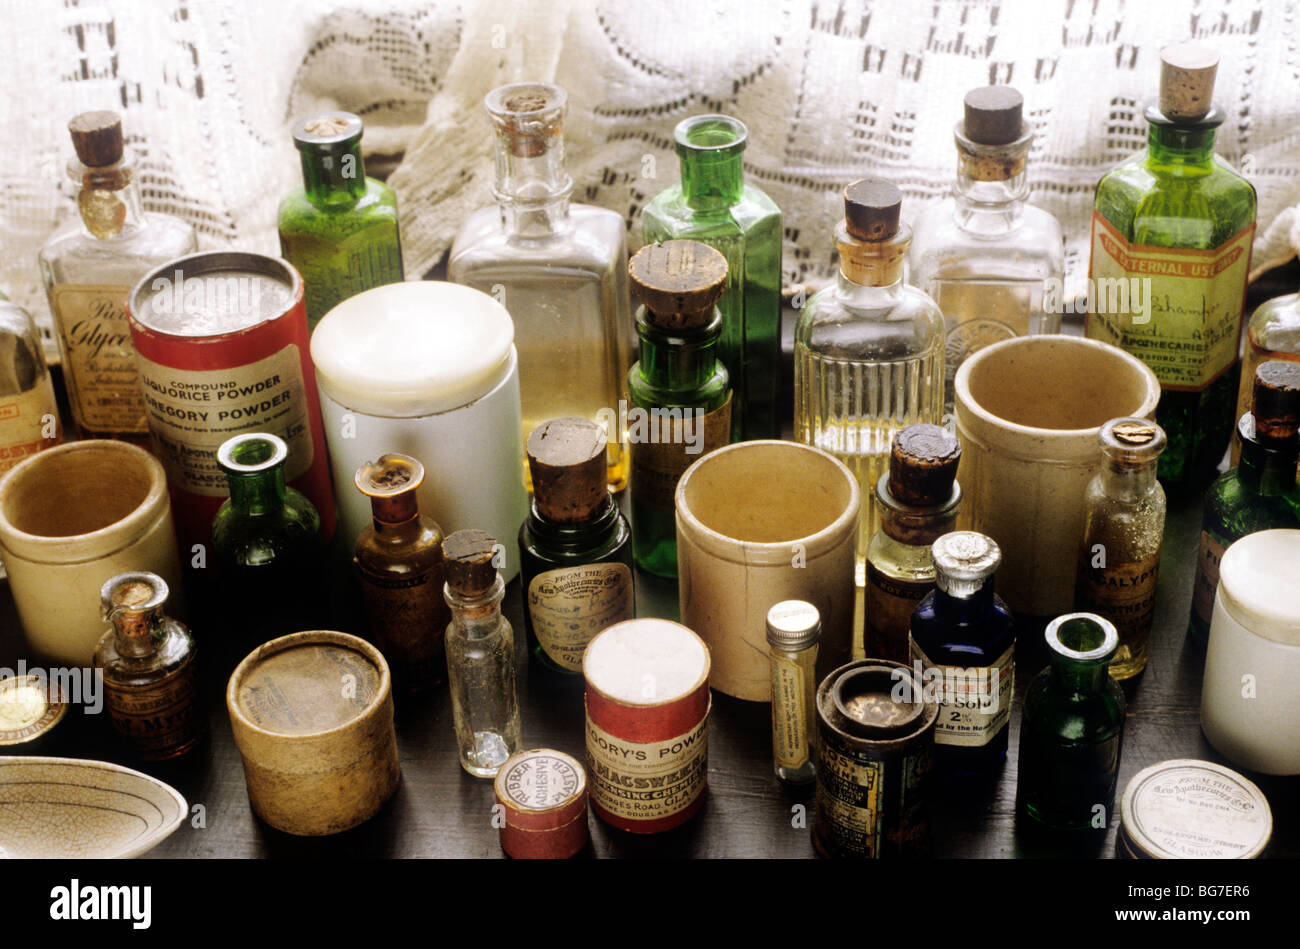 Glasgow, The Tenement House, interior detail exhibit museum Scotland UK old medicine bottle bottles jar jars display Stock Photo